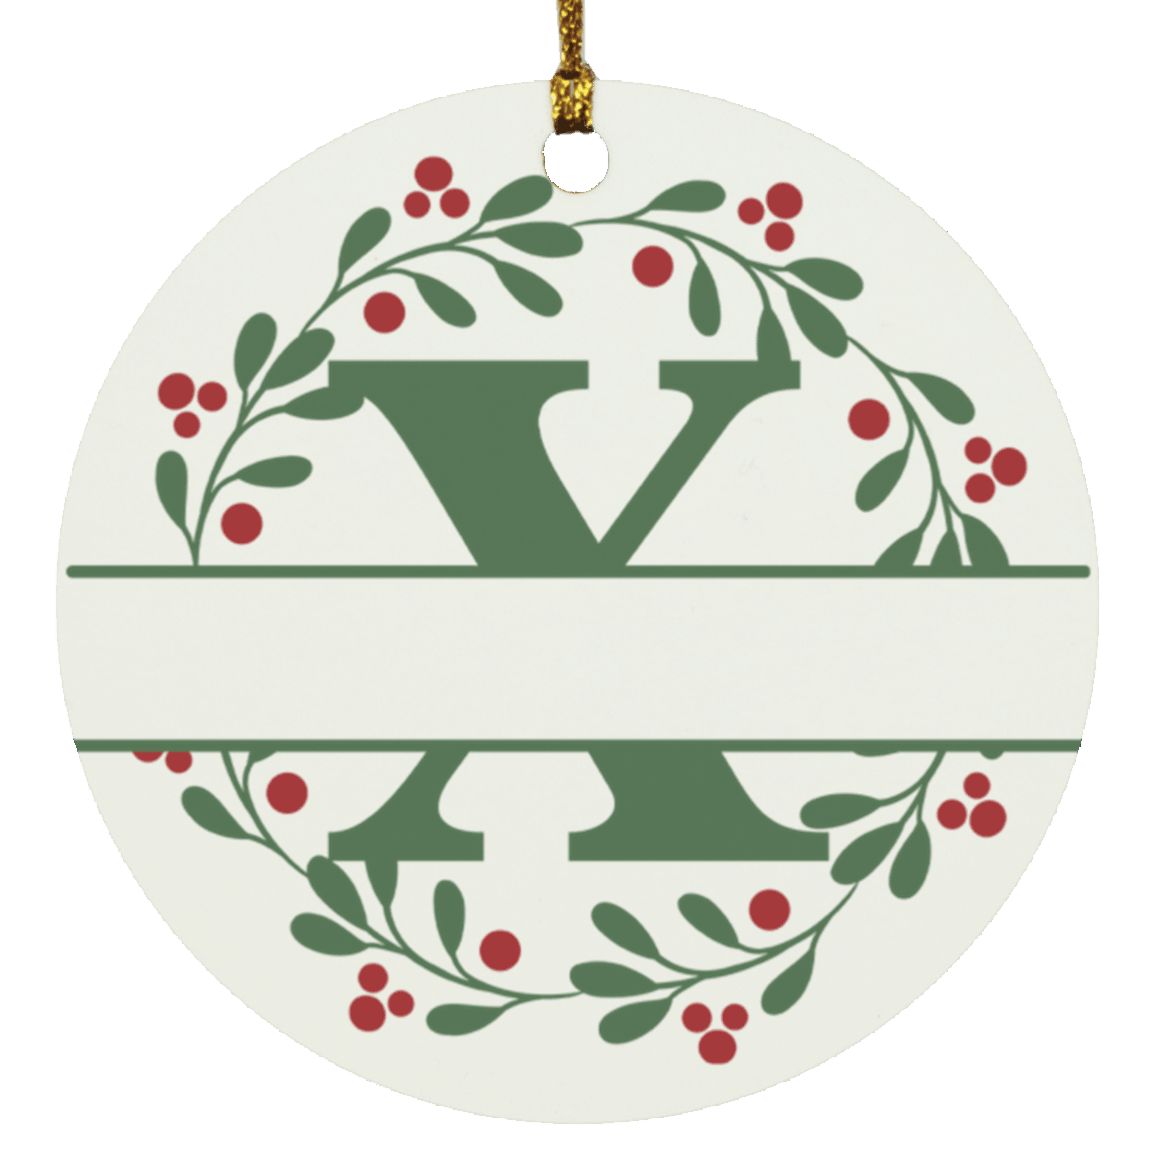 Personalized Split Letter Monogram Christmas Tree Ornaments - Mallard Moon Gift Shop